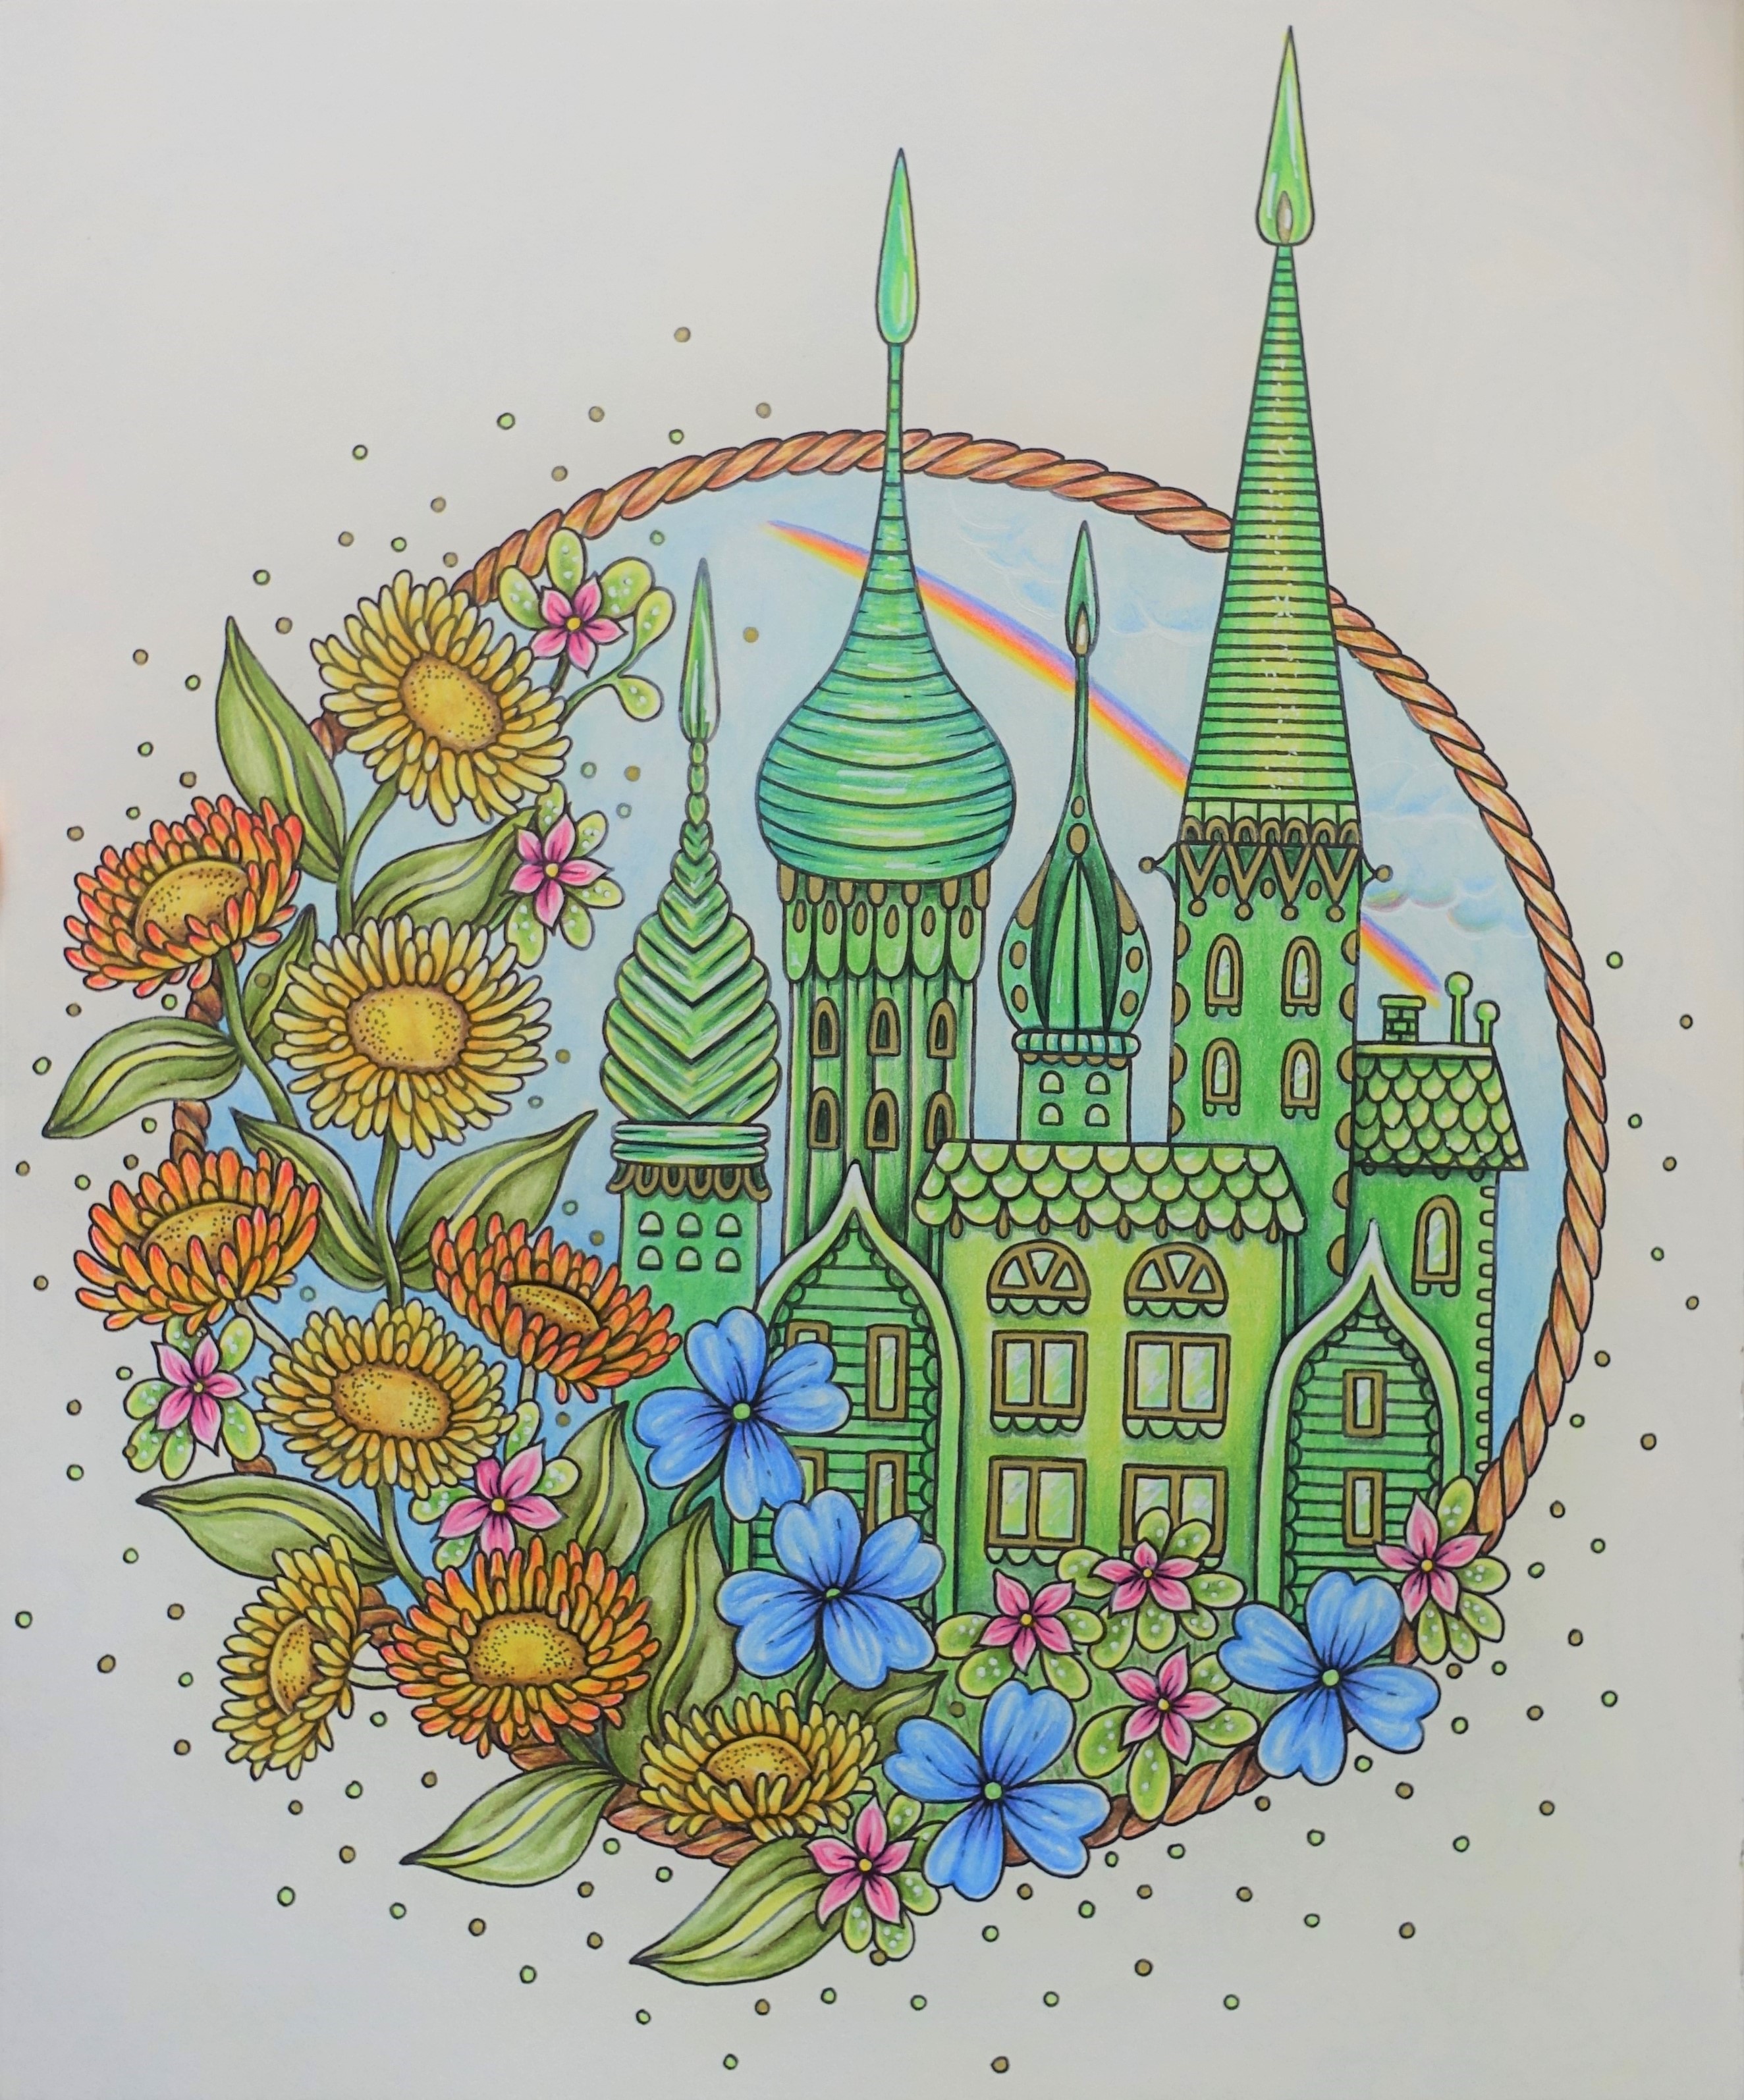 Princess Luna - Part 2, Seasons Coloring Book by Hanna Karlzon